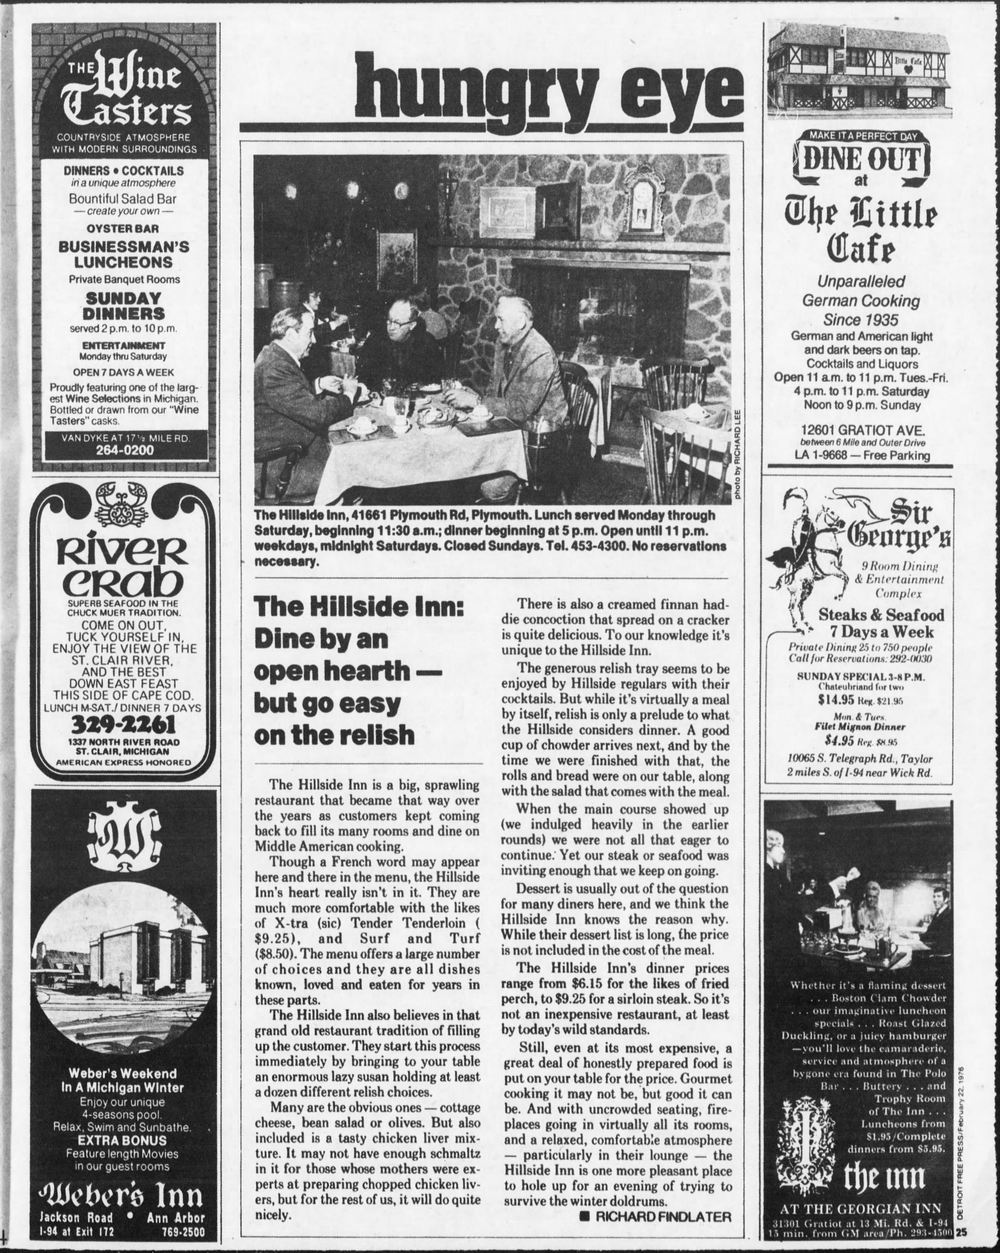 Courthouse Grille (Hillside Inn, Ernestos) - Feb 22 1976 Review